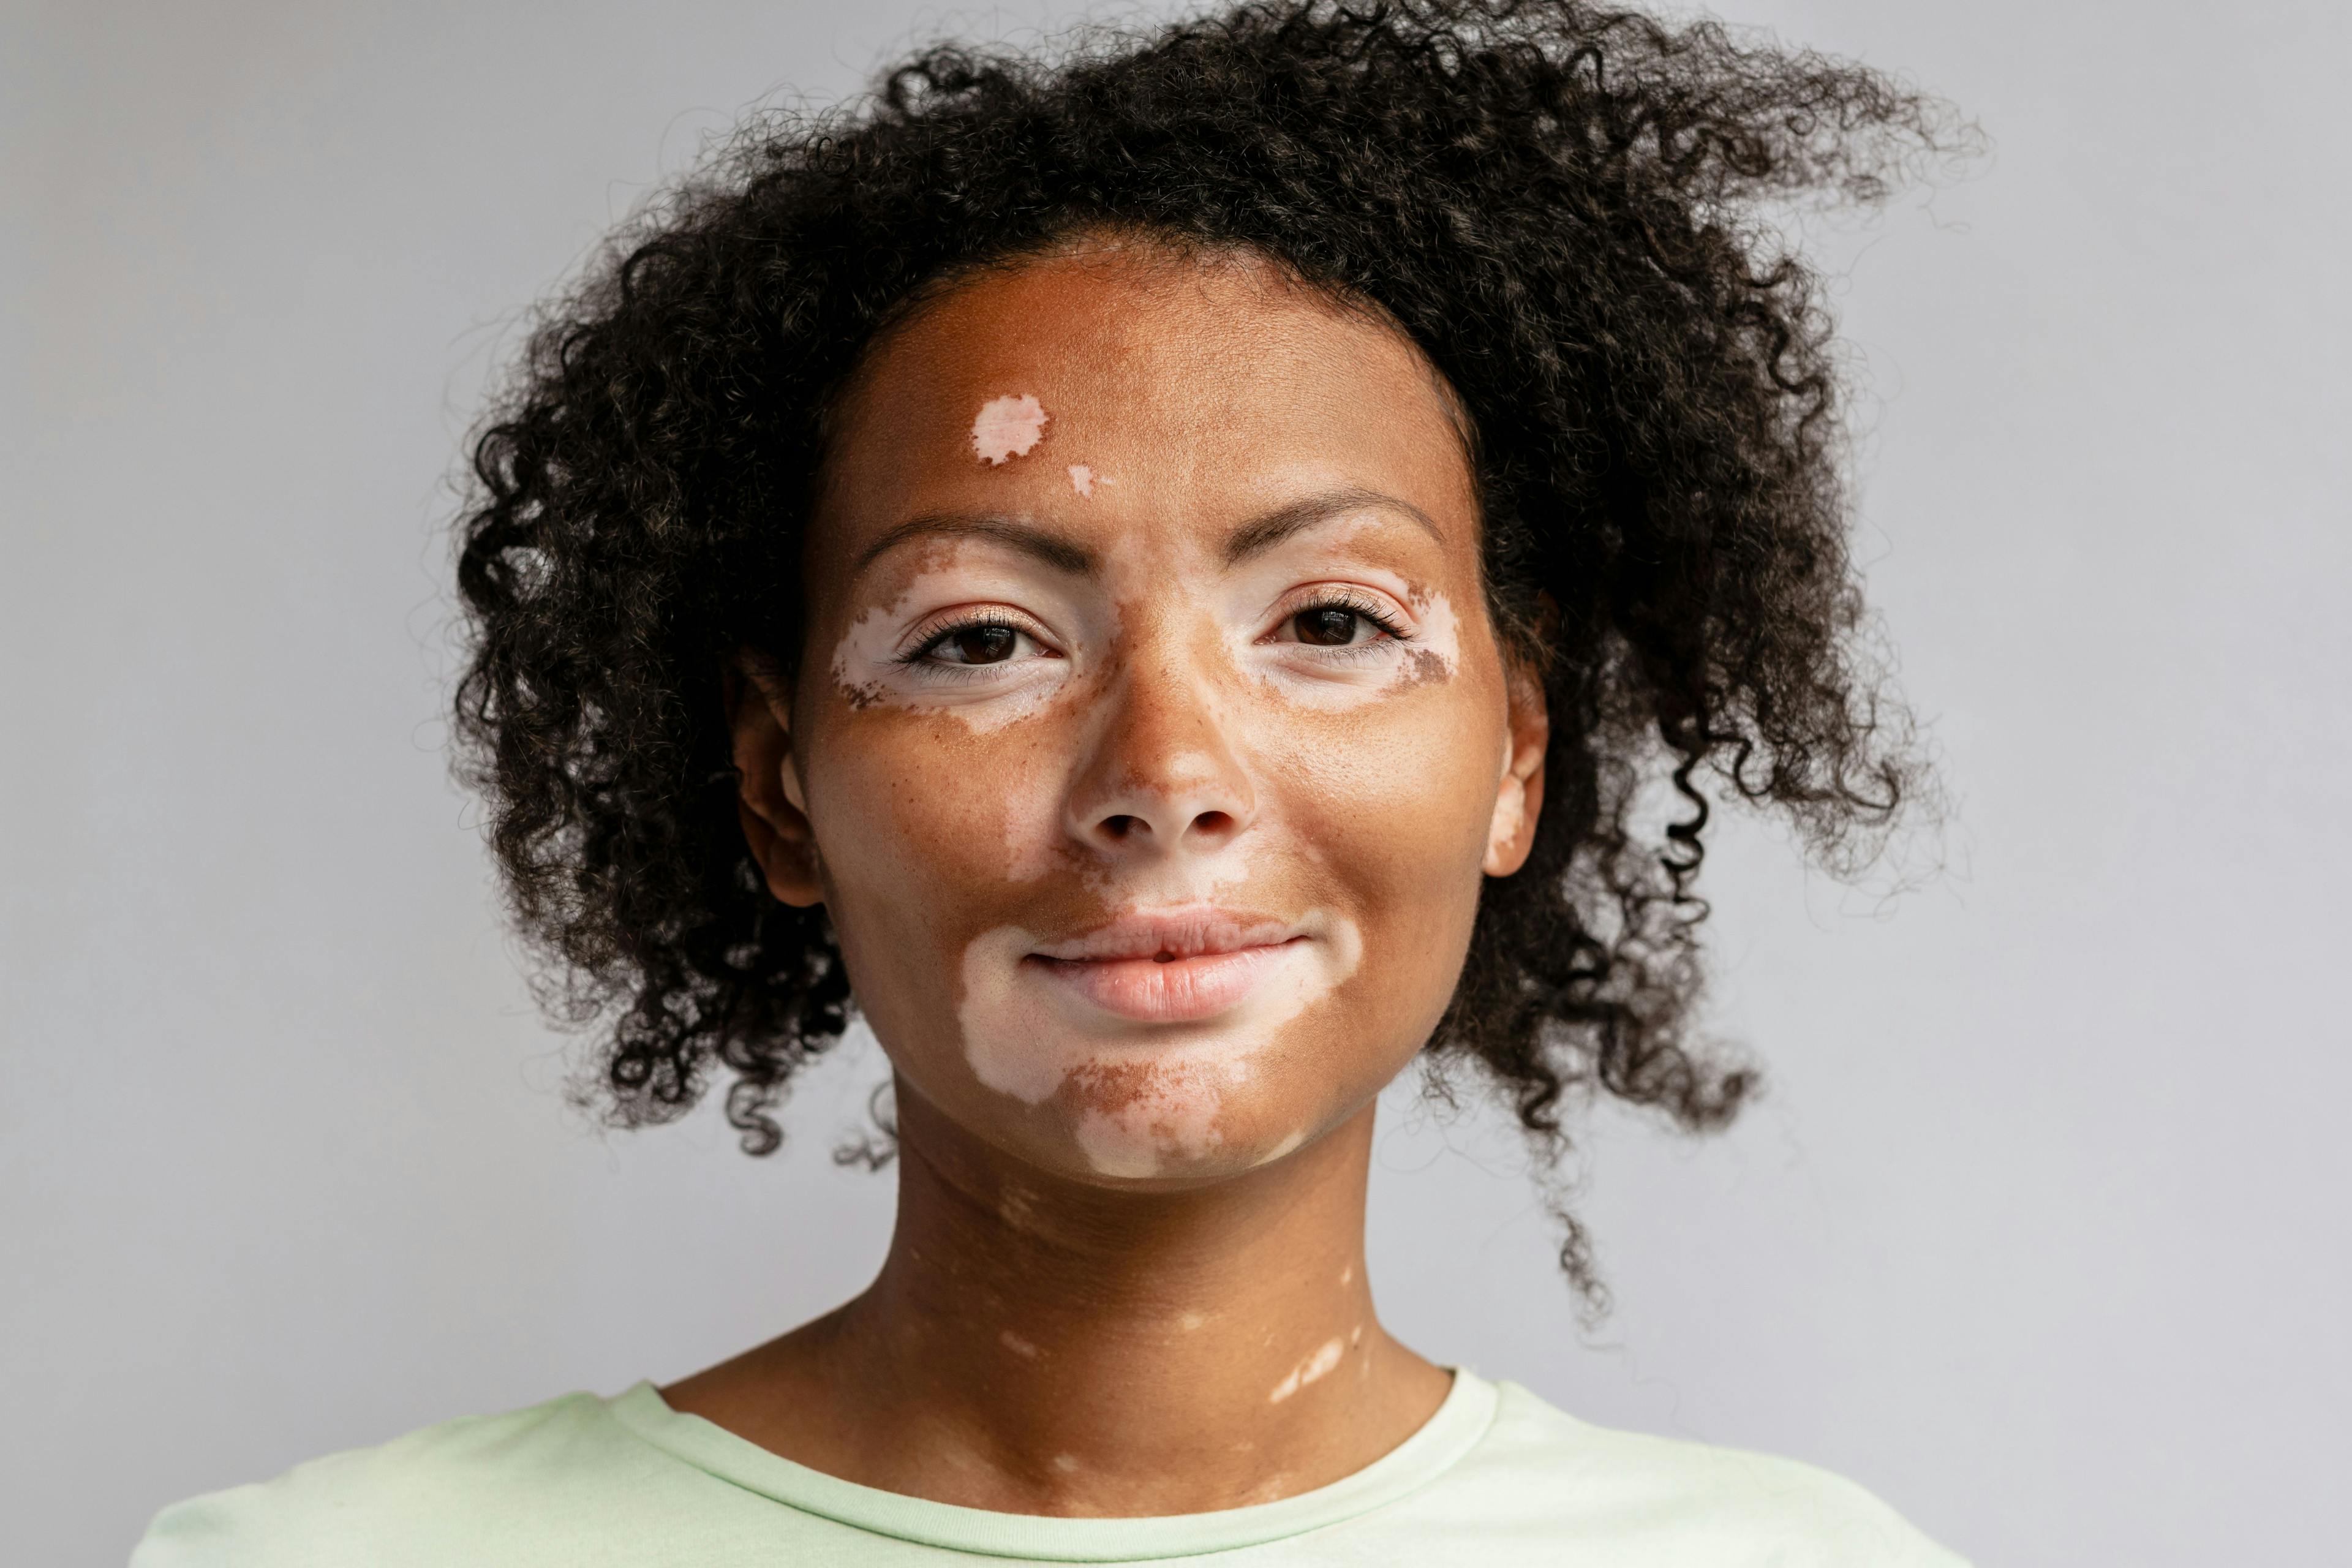 Woman with vitiligo | Image credit: Drobot Dean - stock.adobe.com